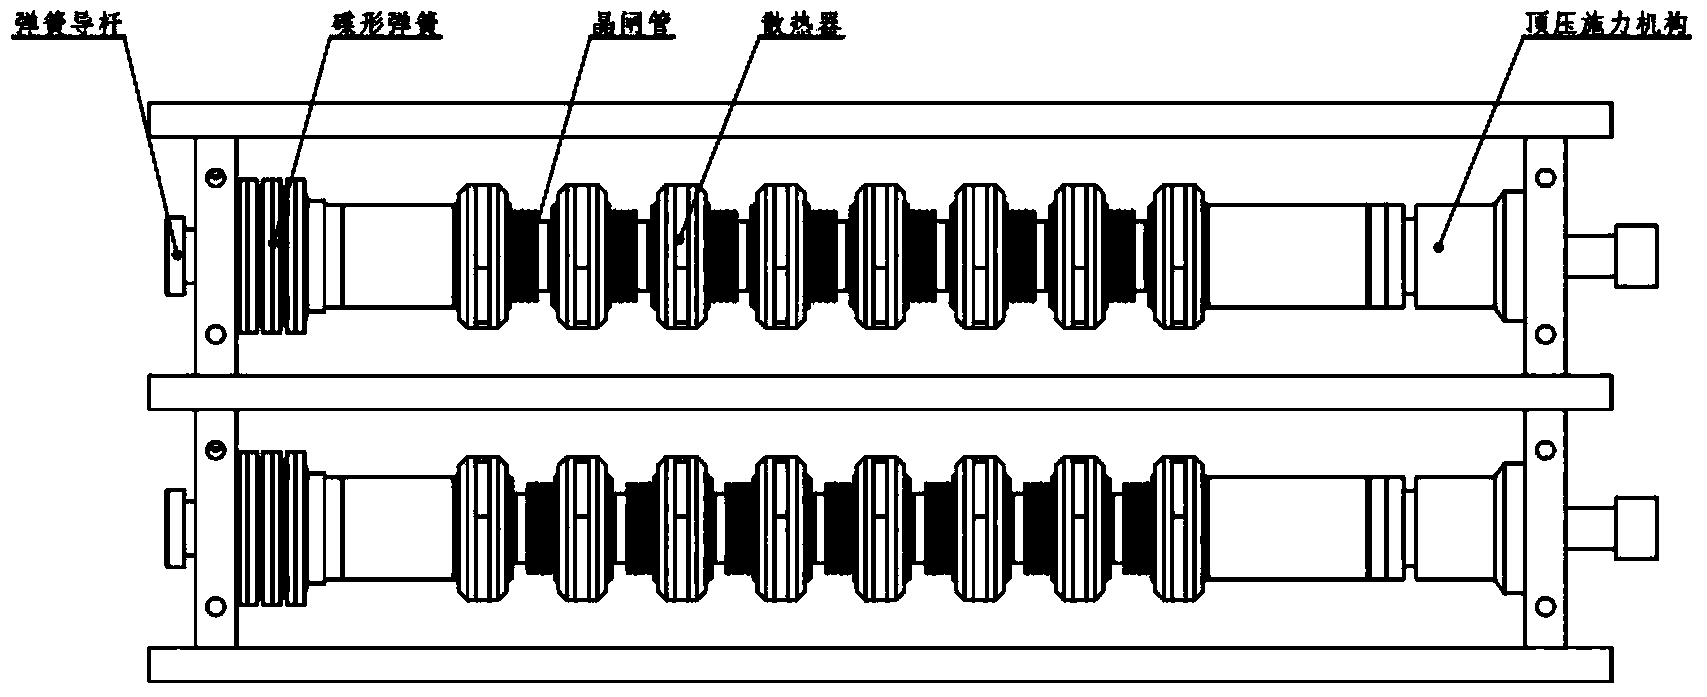 Disc spring crimping measuring tool for thyristor valve strings and IGBT (insulated gate bipolar transistor) valve strings